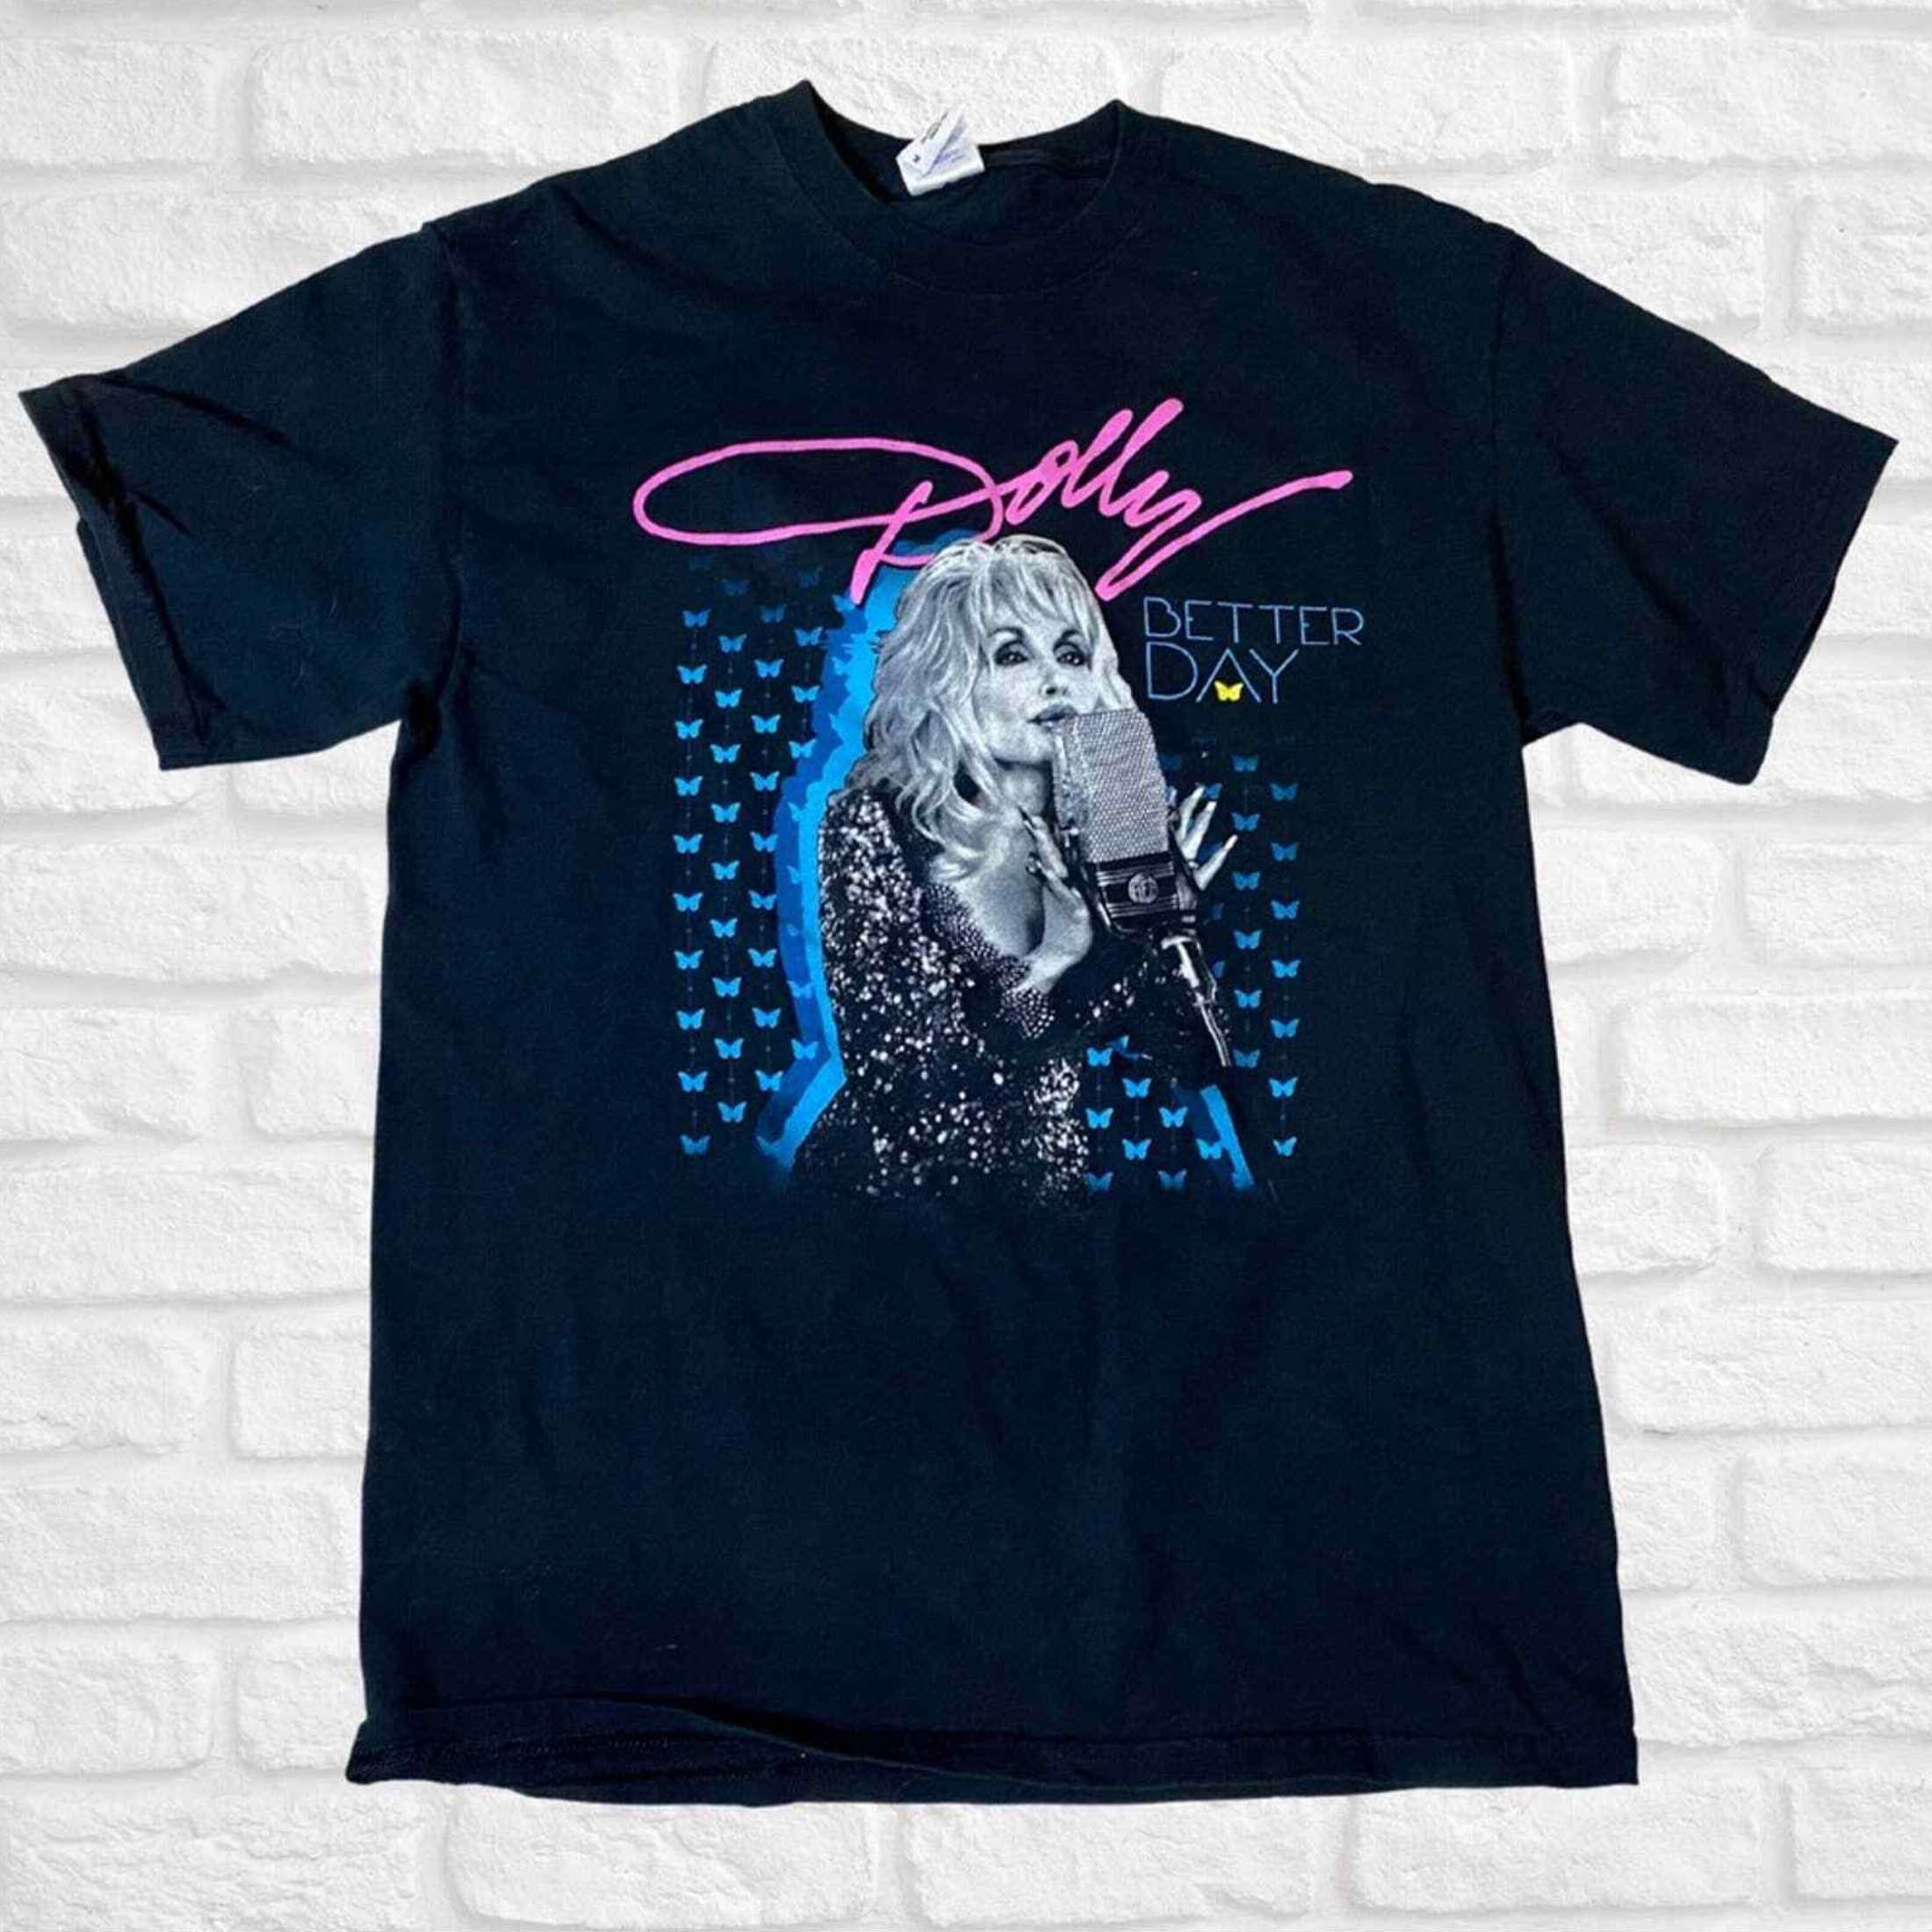 Dolly Parton Singer Better Day Vintage Art Unisex T-Shirt